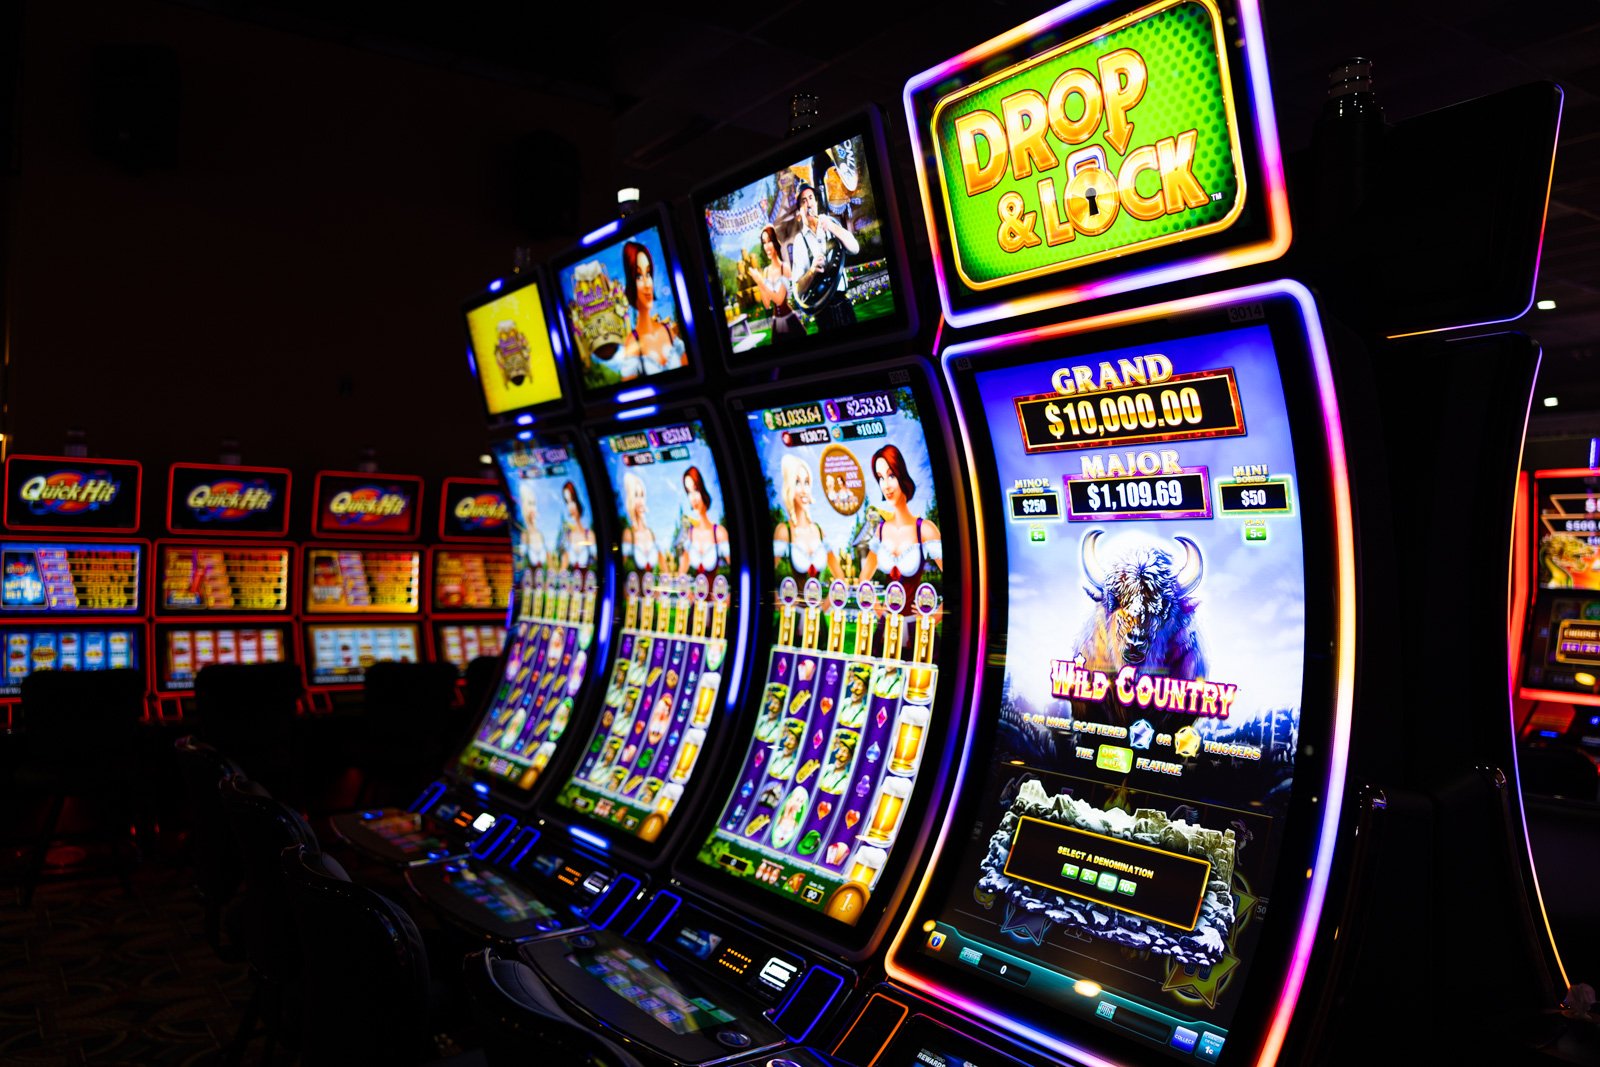 rosebud-casino-gaming-floor-slot-machines-near-valentine-nebraska-8.jpg